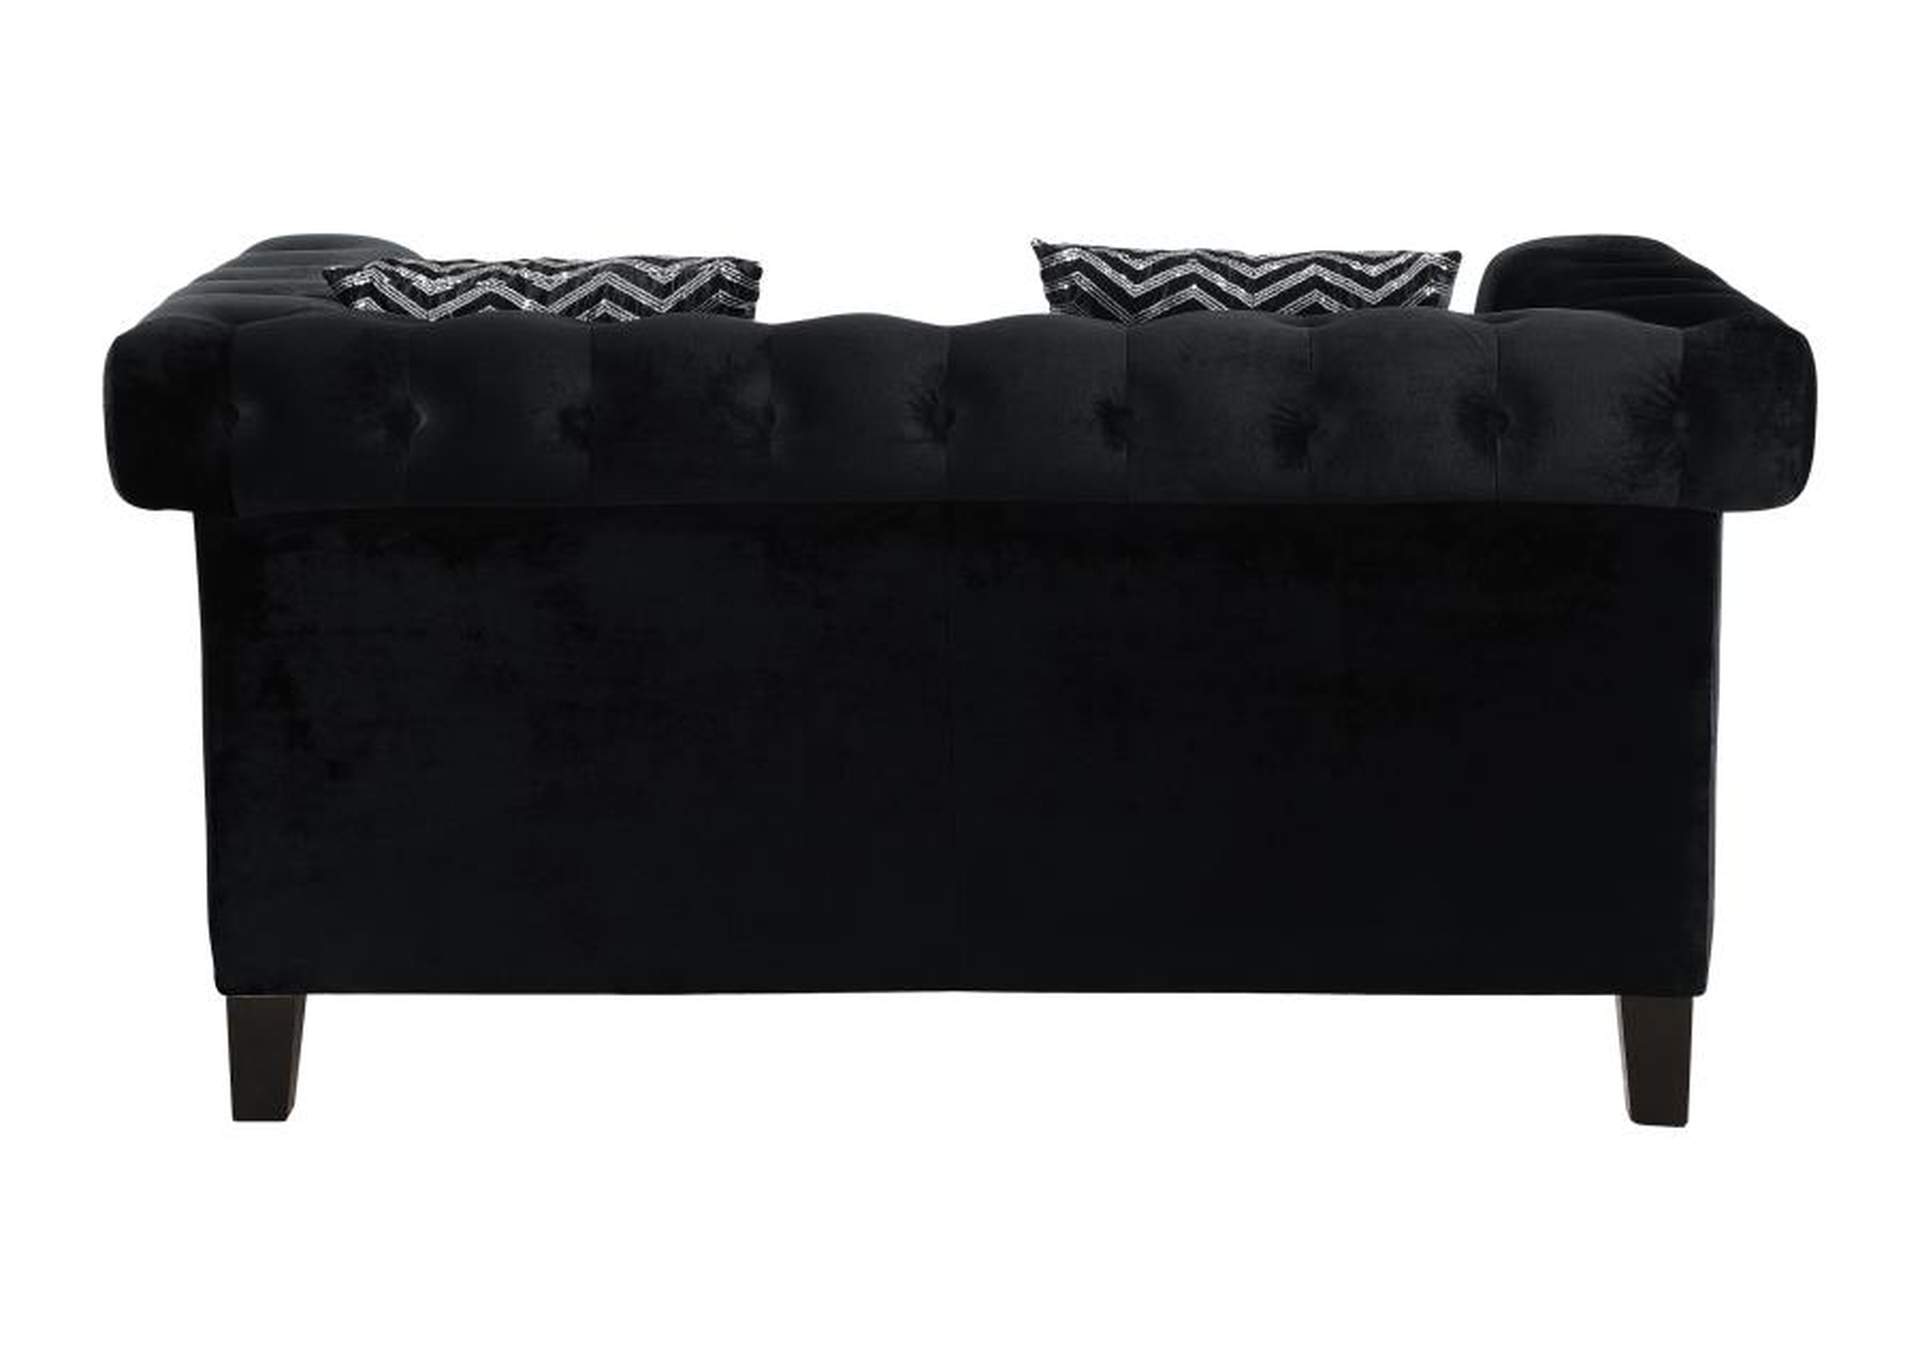 Reventlow Tufted Loveseat Black,Coaster Furniture